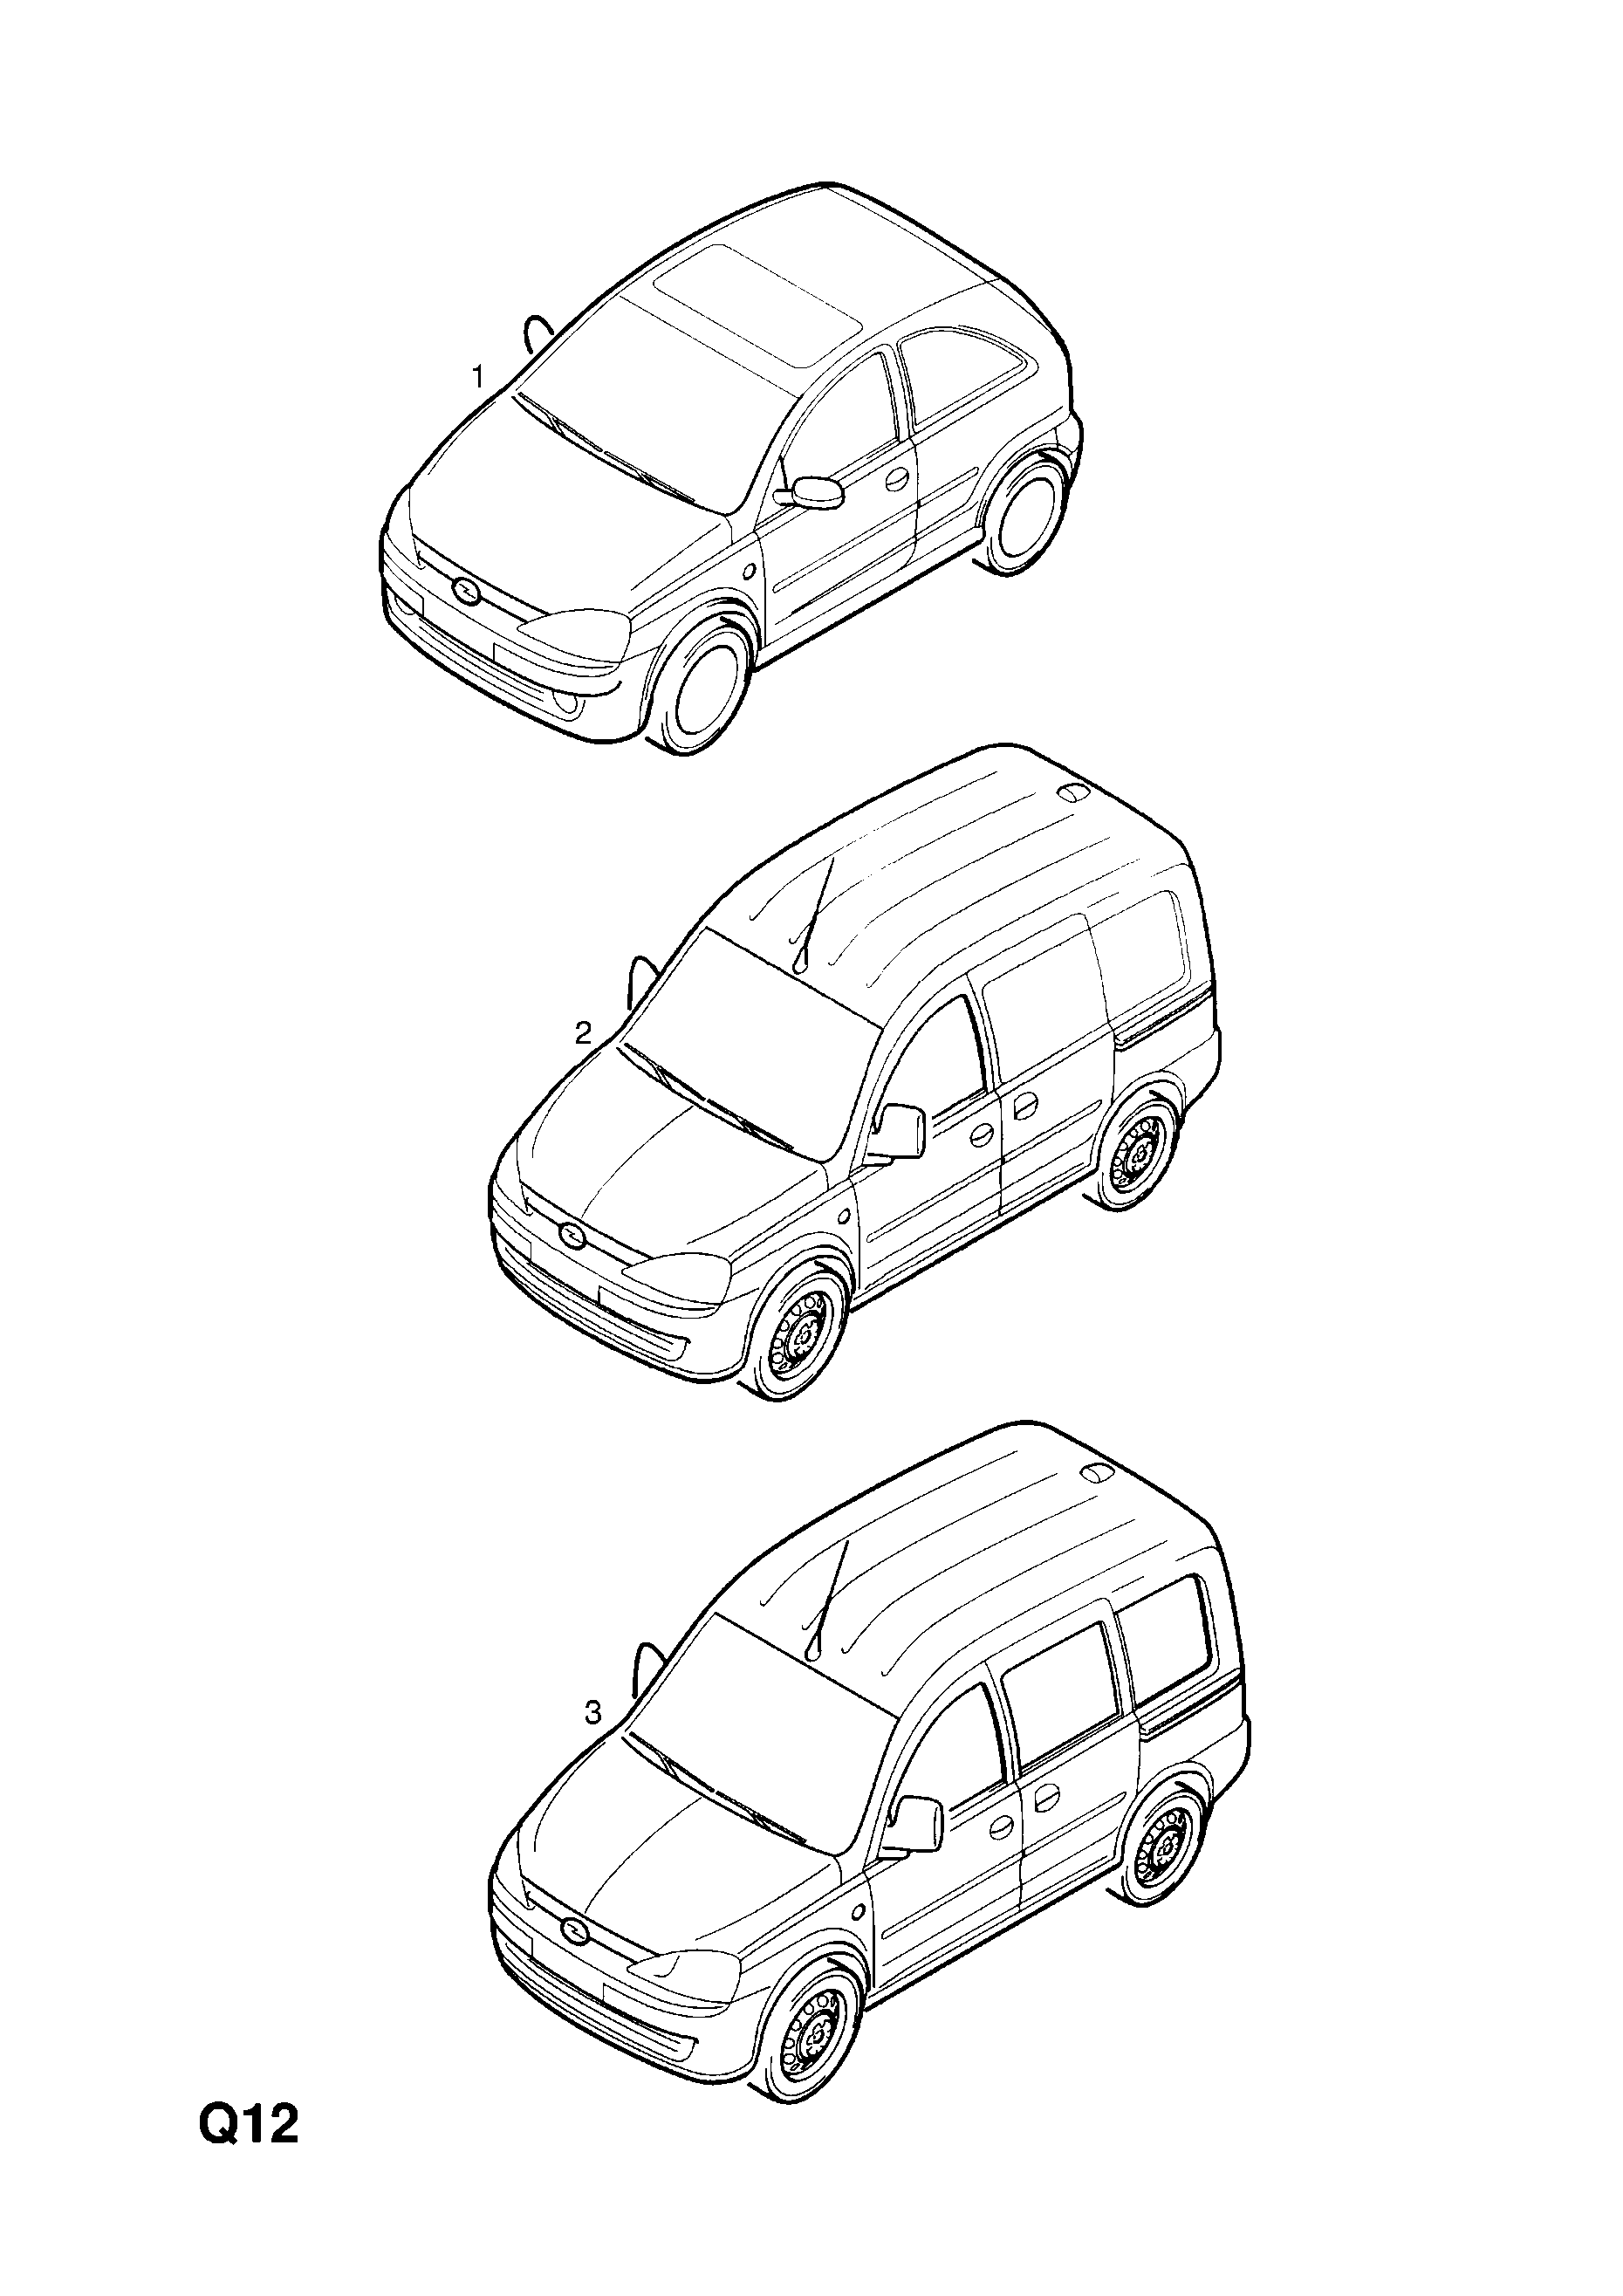 MODEL AUTOS <small><i>[BEHALVE VAUXHALL]</i></small>